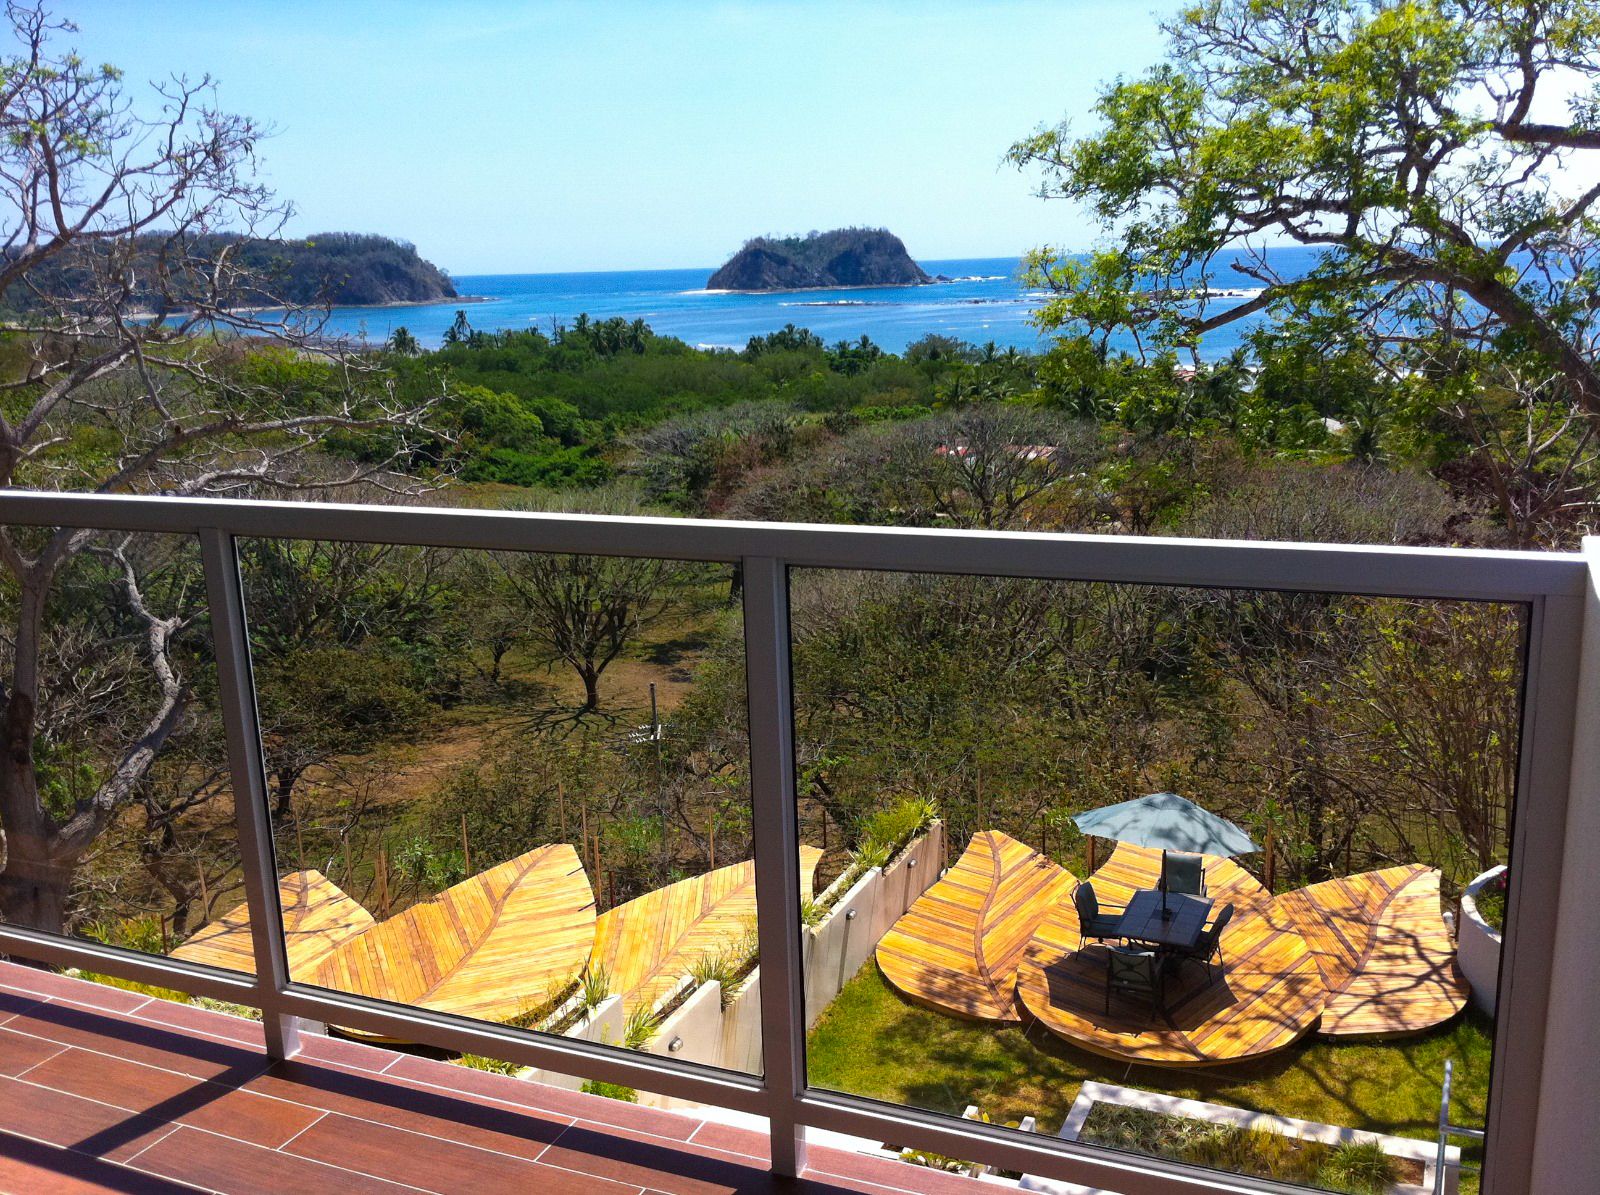 Jungle and ocean view Samara Reef Condos luxury real estate for sale samara Guanacaste Costa Rica